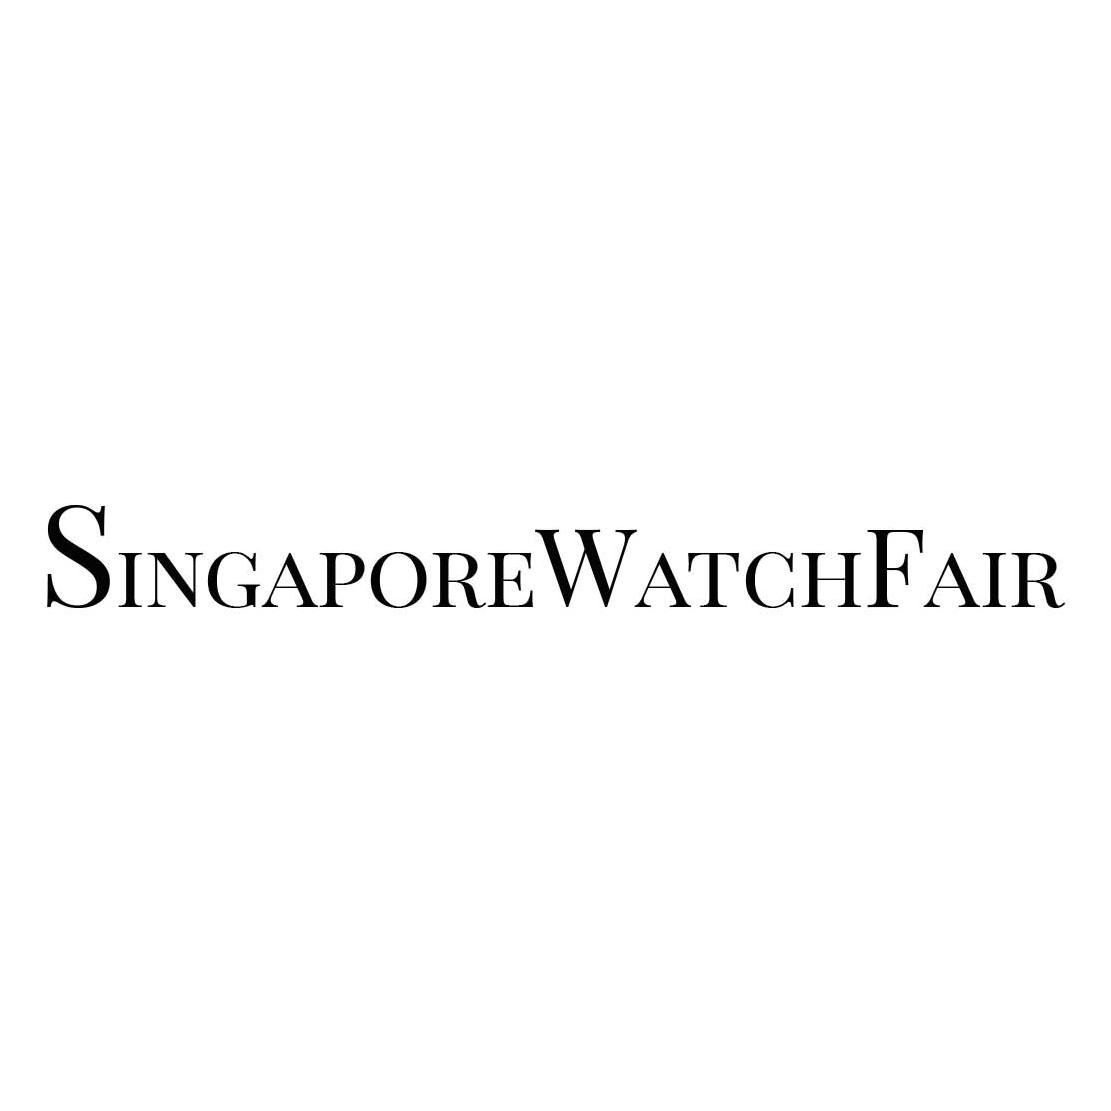 Singapore Watch Fair